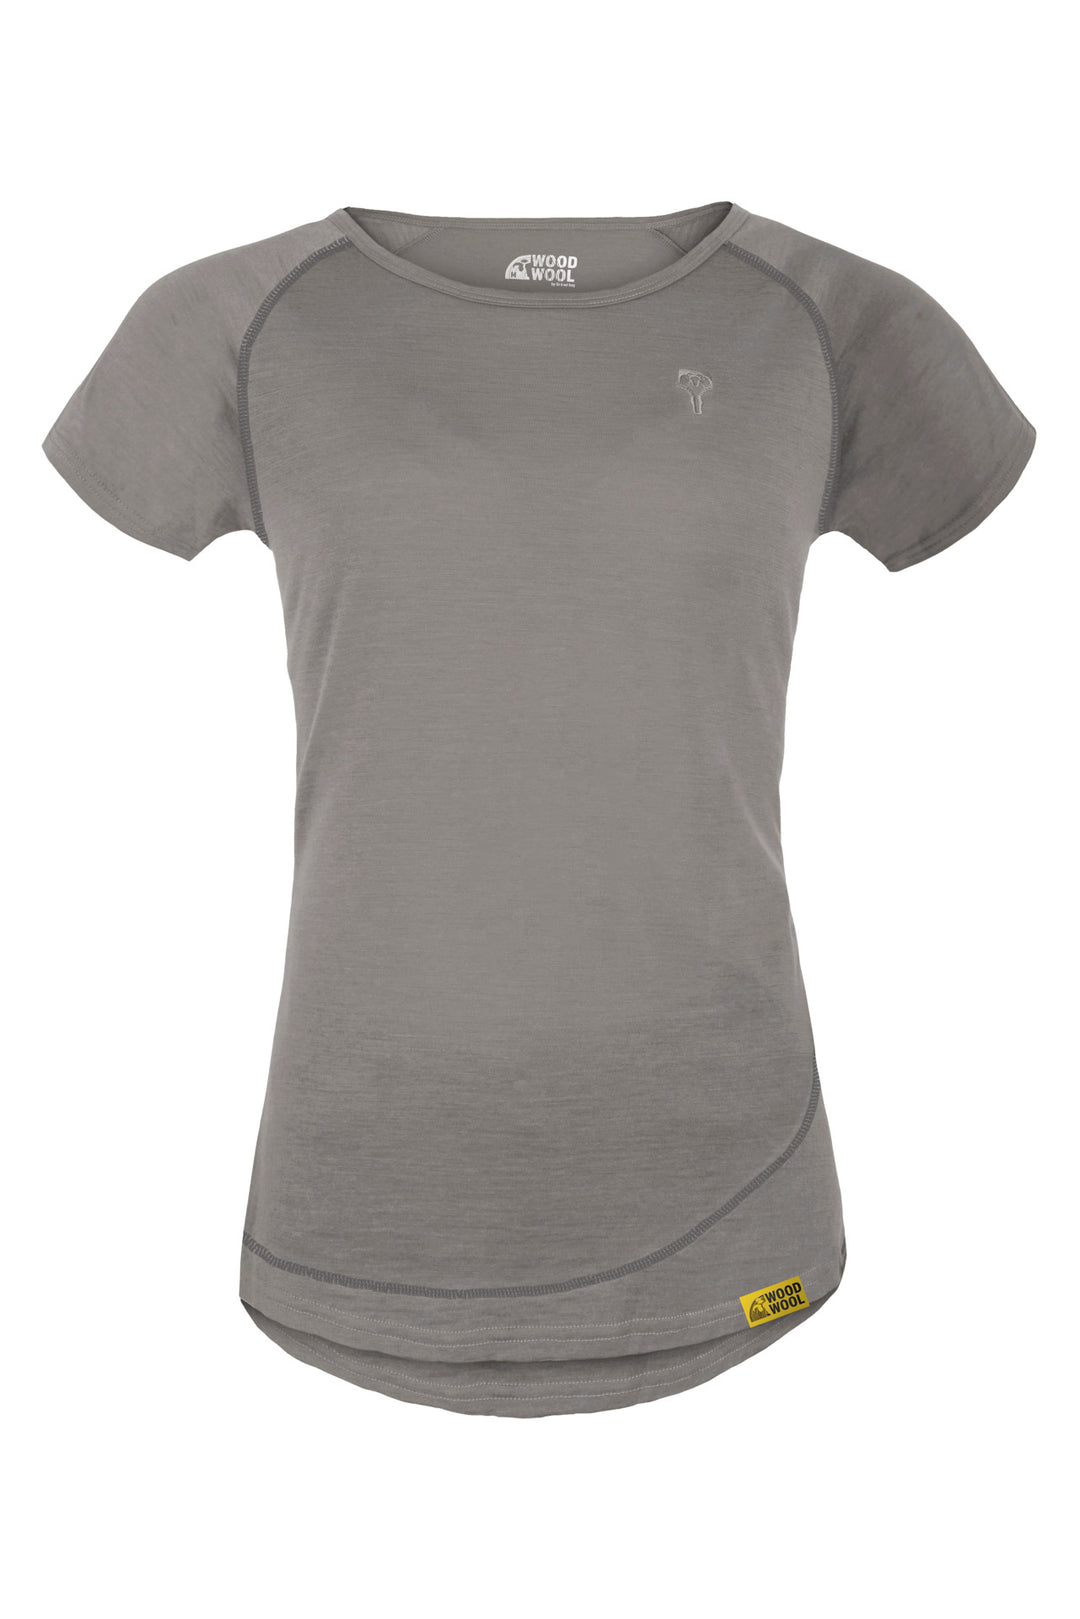 WoodWool T-Shirt Lady Burnham - Slate Grey